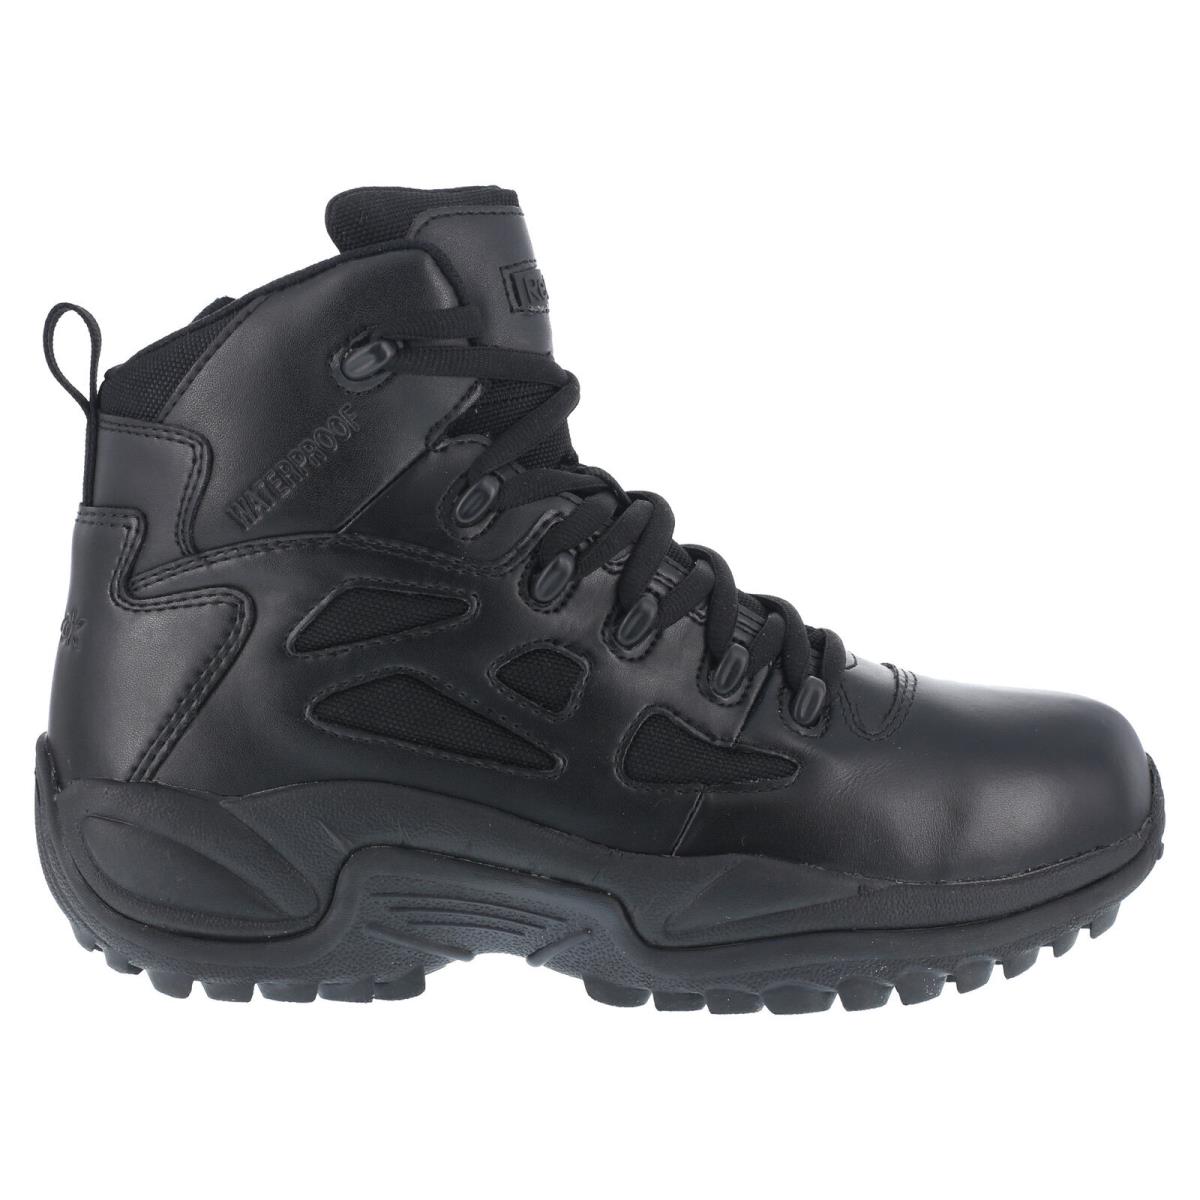 Reebok Mens Black Leather Work Boots Rapid Response Zip 6